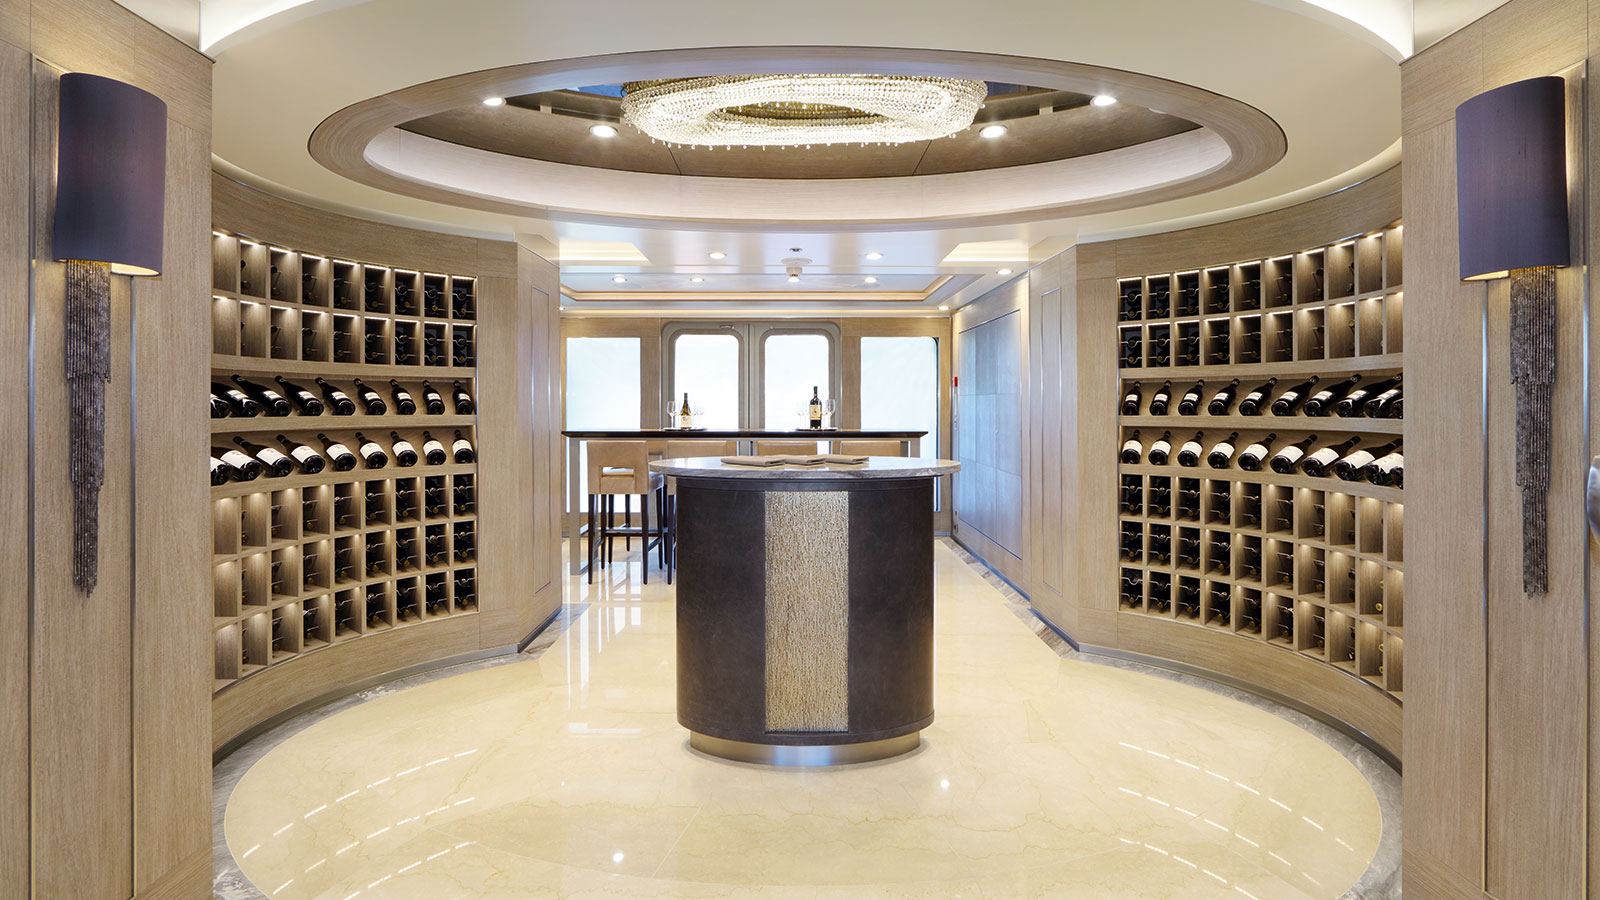 Cabinet angelina wine Court denies